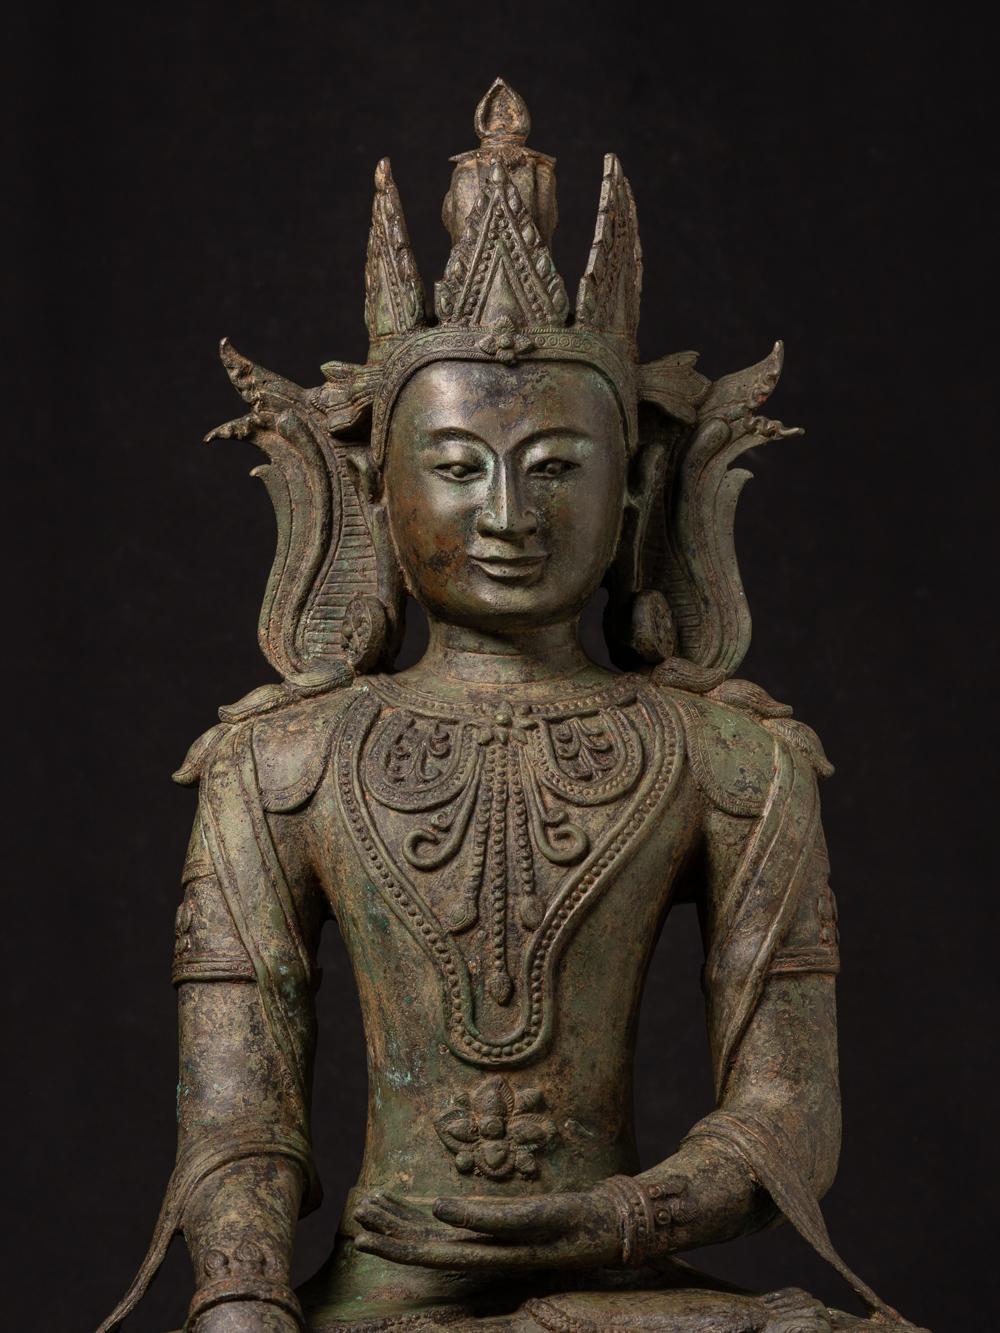 Material : bronze
89,5 cm high
53,5 cm wide and 29,5 cm deep
Arakan style
Bhumisparsha mudra
19th century
Very special and rare Buddha !
Weight: 52,1 kgs
Originating from Burma
Nr: 2816-3